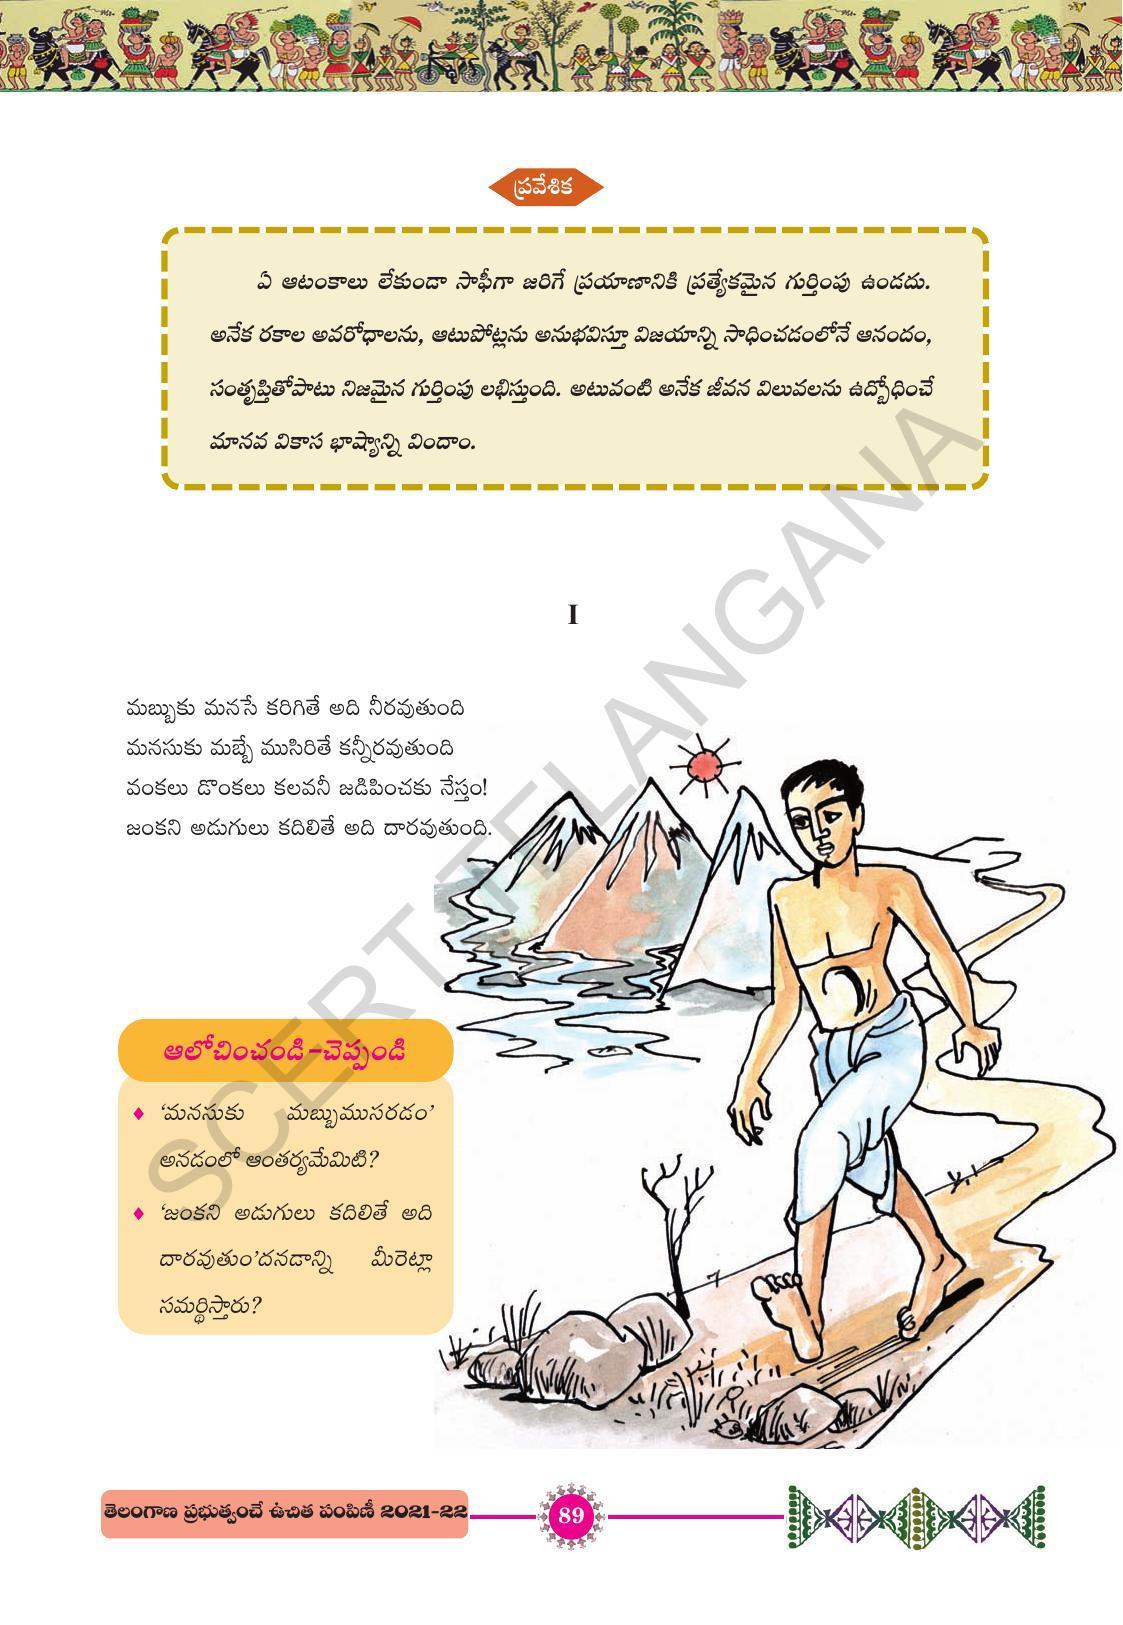 TS SCERT Class 10 First Language (Telugu Medium) Text Book - Page 101